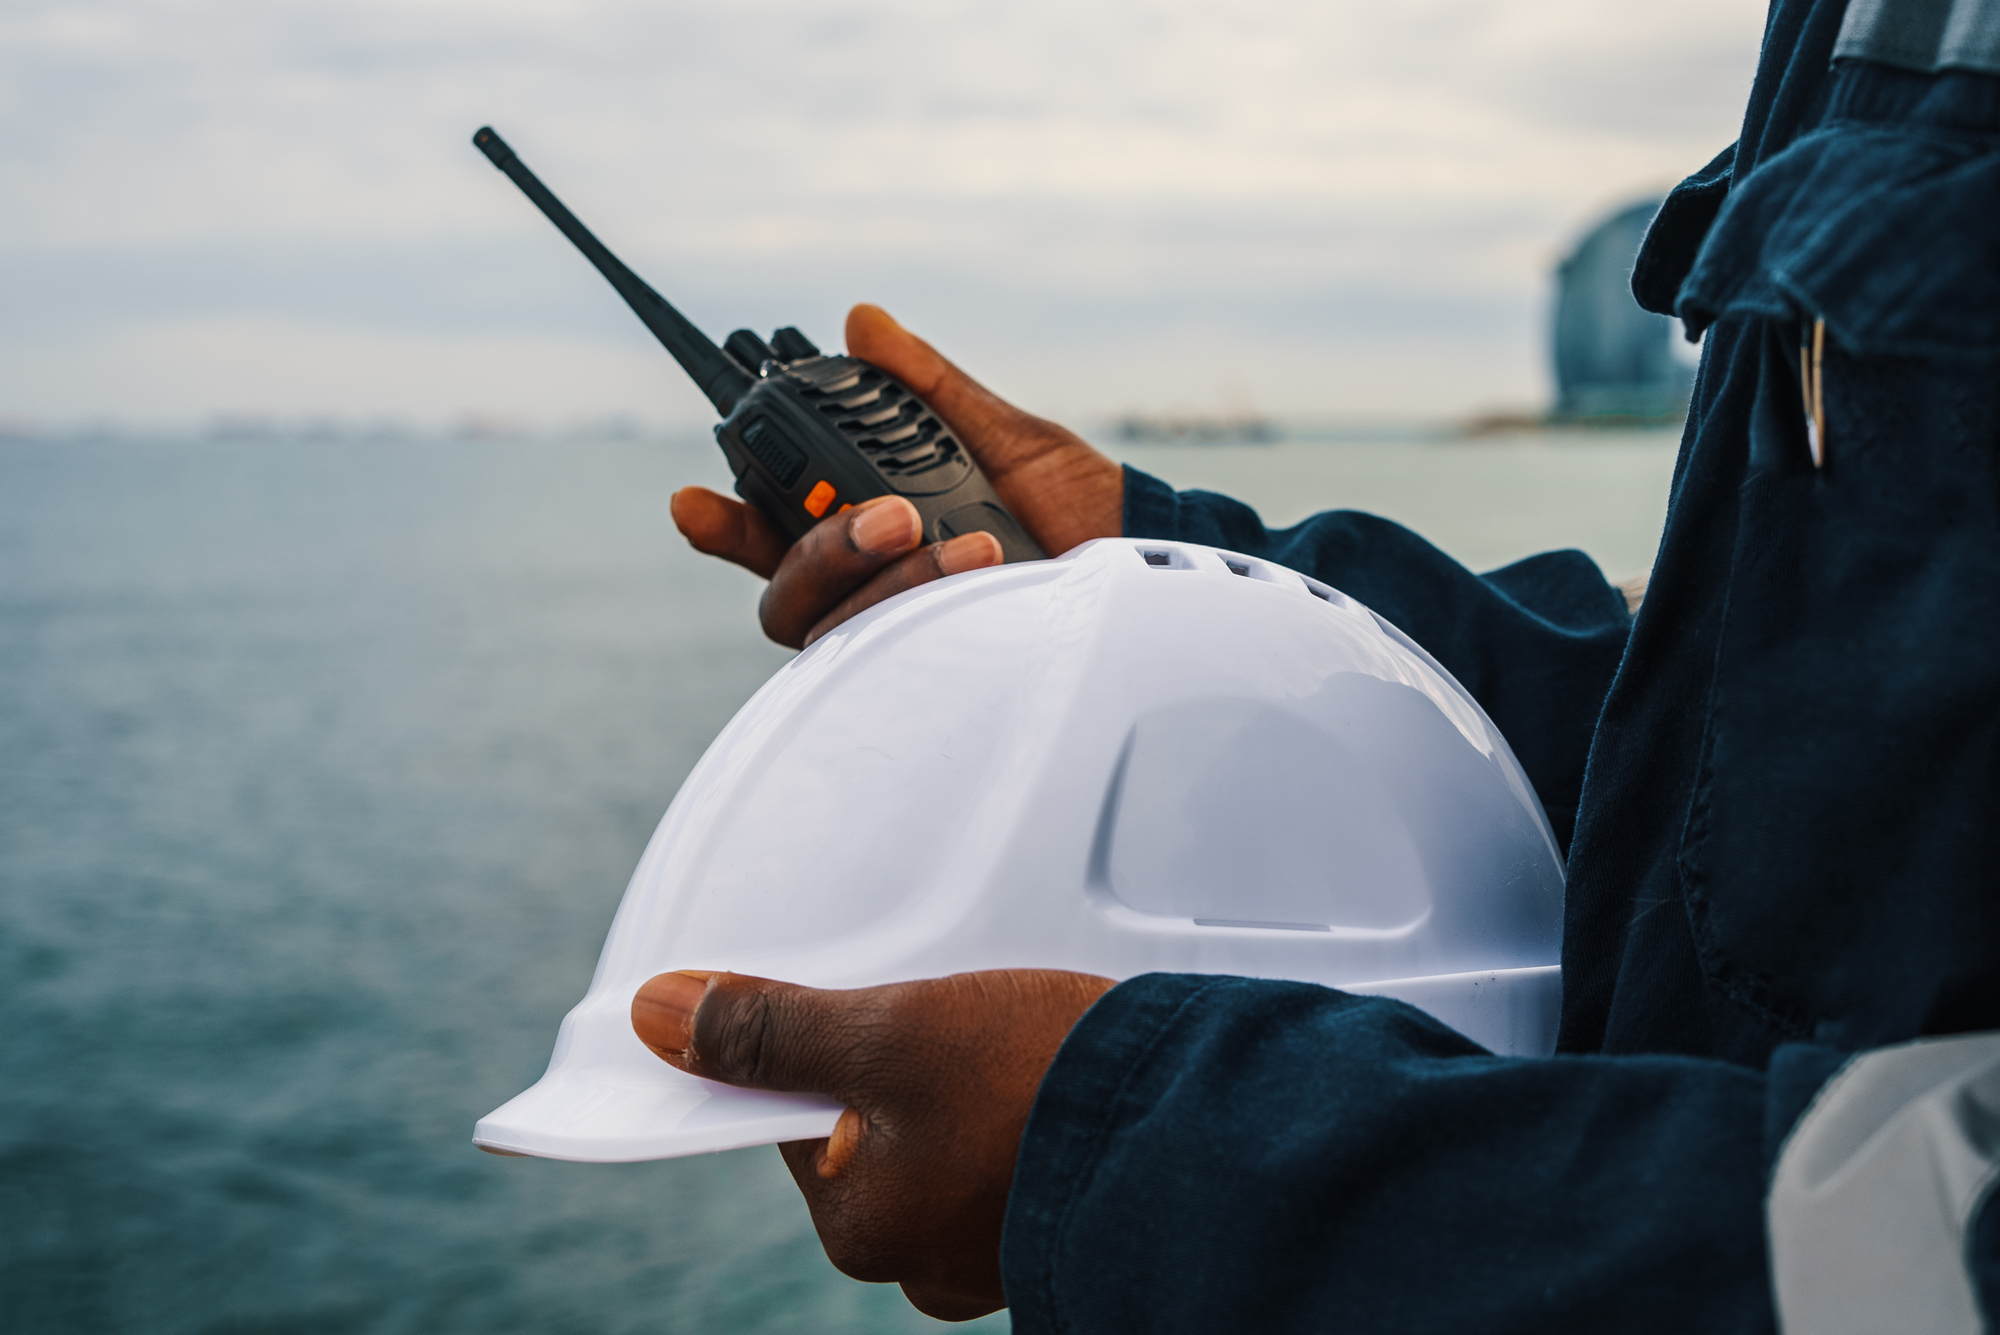 Hands of seaman with helmet and VHF radio